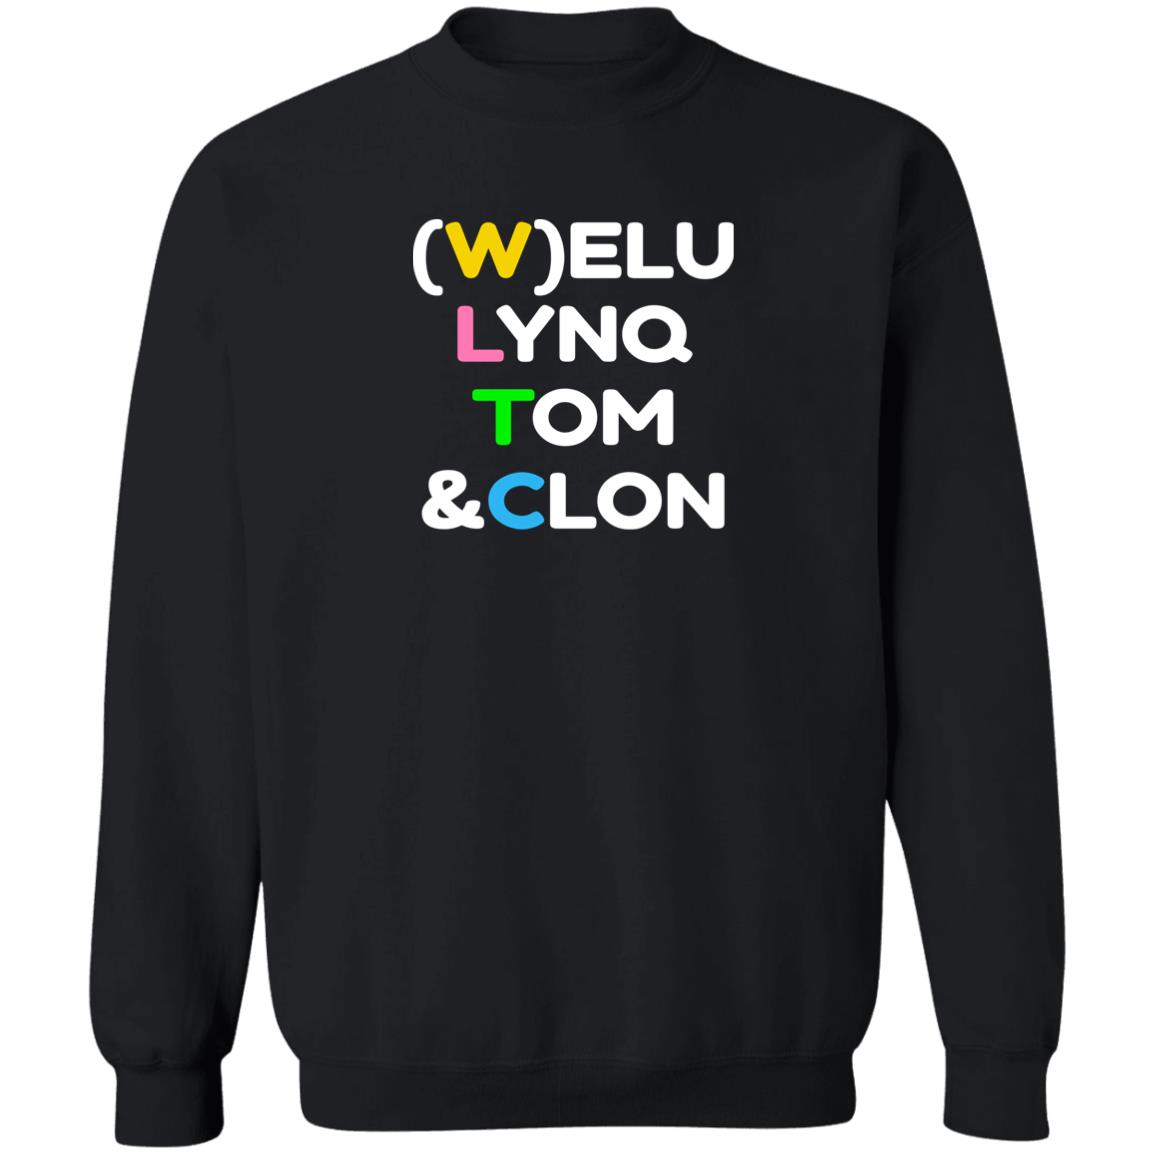 Wltc Welu Lynq Tom Clon Shirt Panetory – Graphic Design Apparel &Amp; Accessories Online